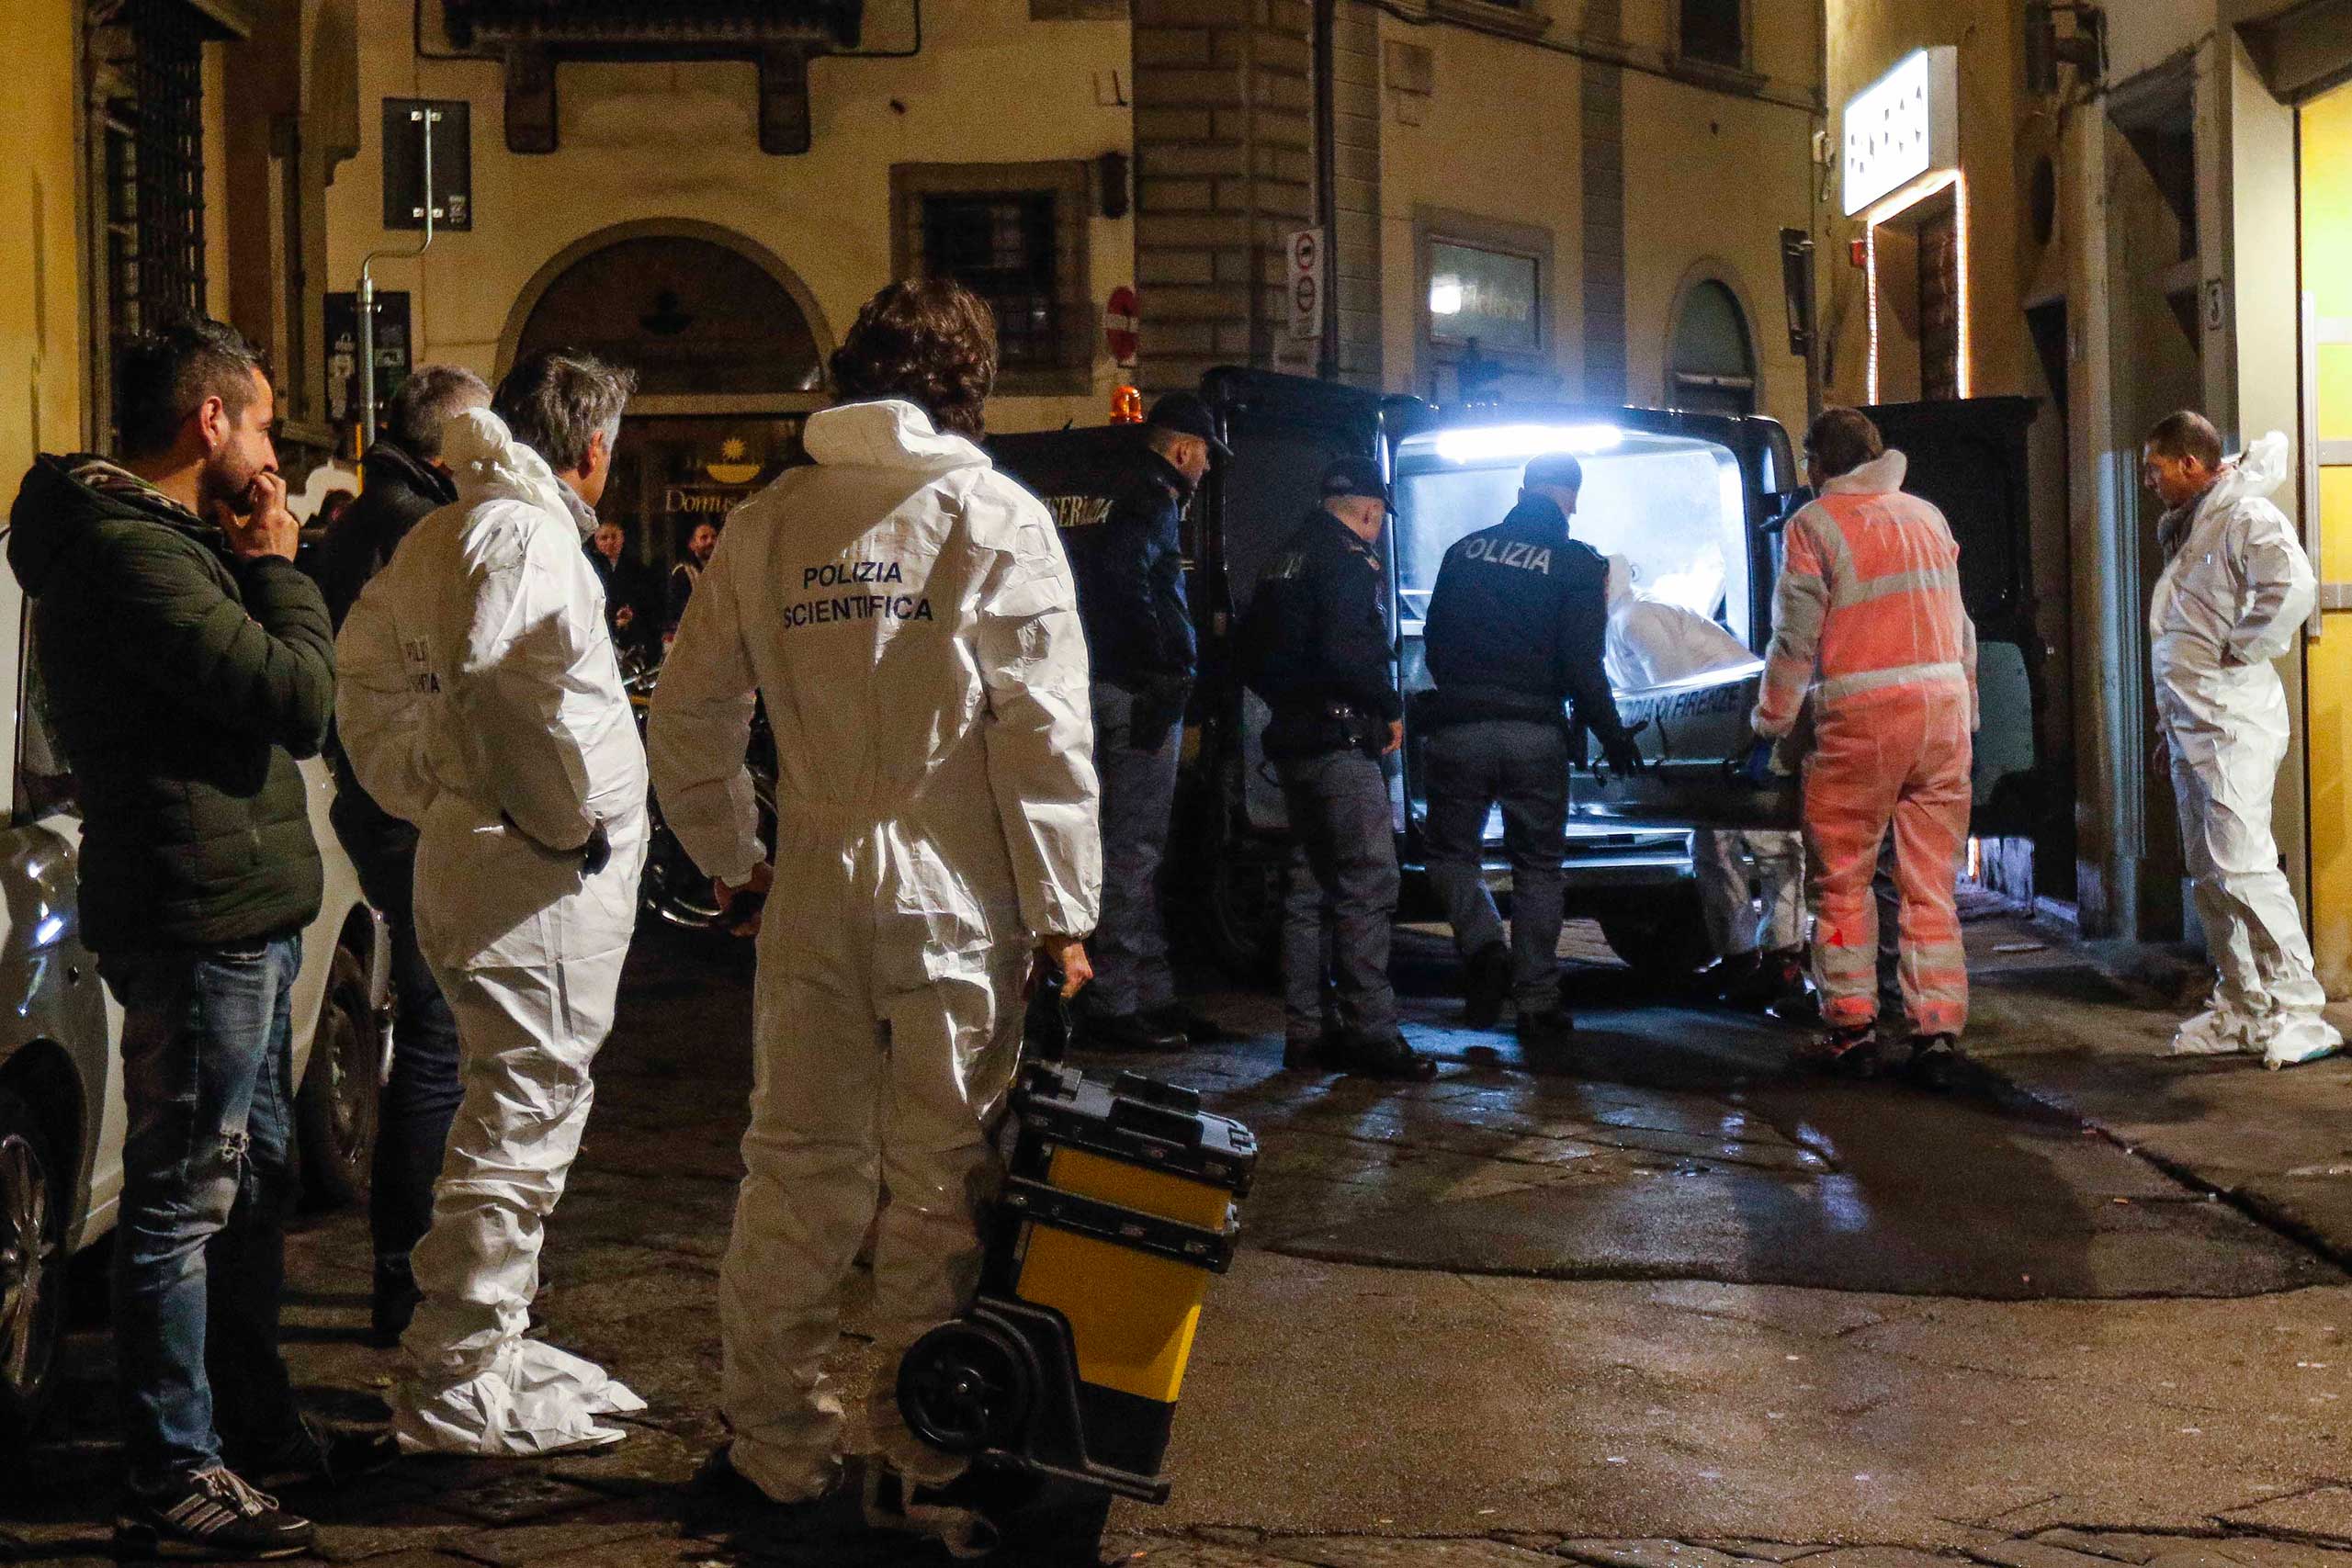 American woman slain in Florence